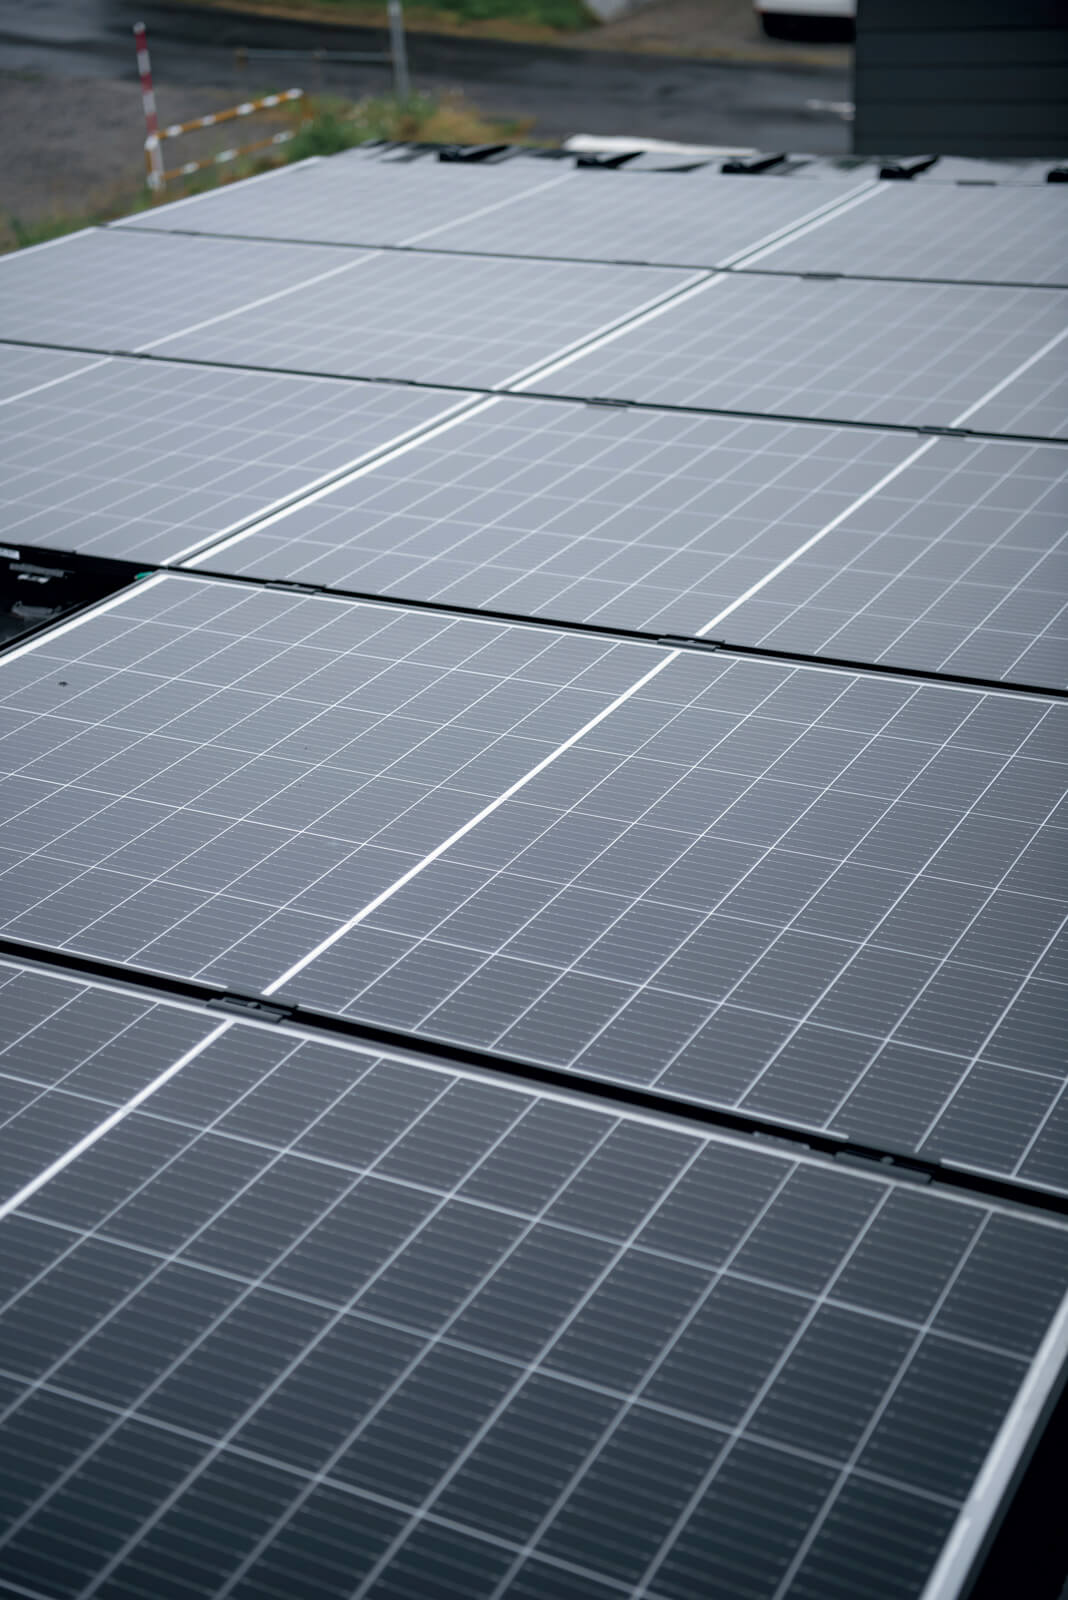 USAMI HOMEでは、新築住宅の8割以上に太陽光発電システムを導入している。Mさん宅も、屋根には耐久性・メンテナンス性の高い屋根材を採用し、9kWの大容量の太陽光発電パネルを搭載した